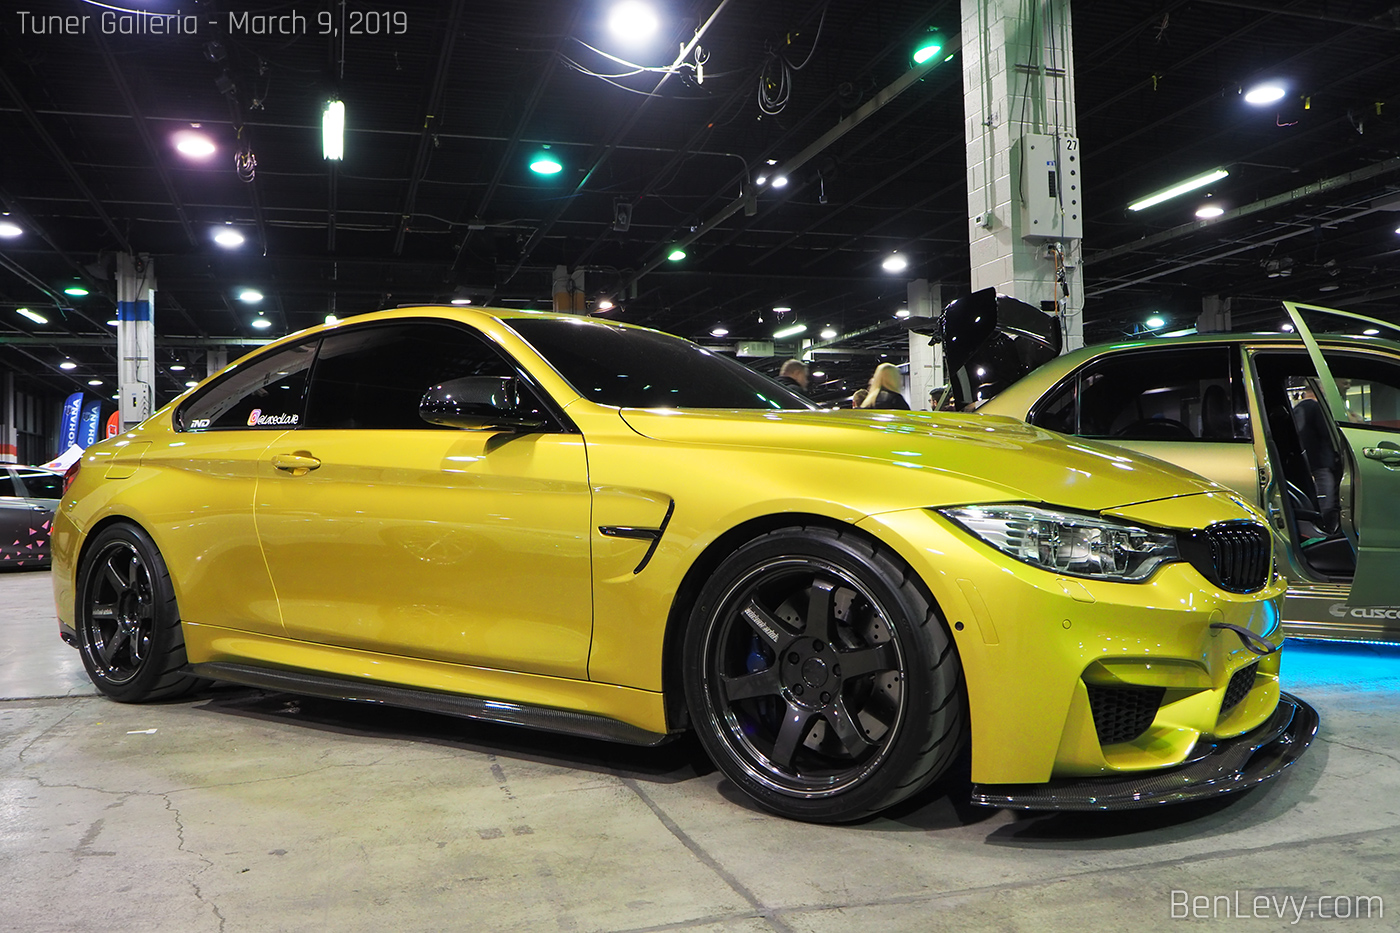 Phoenix Yellow BMW M4